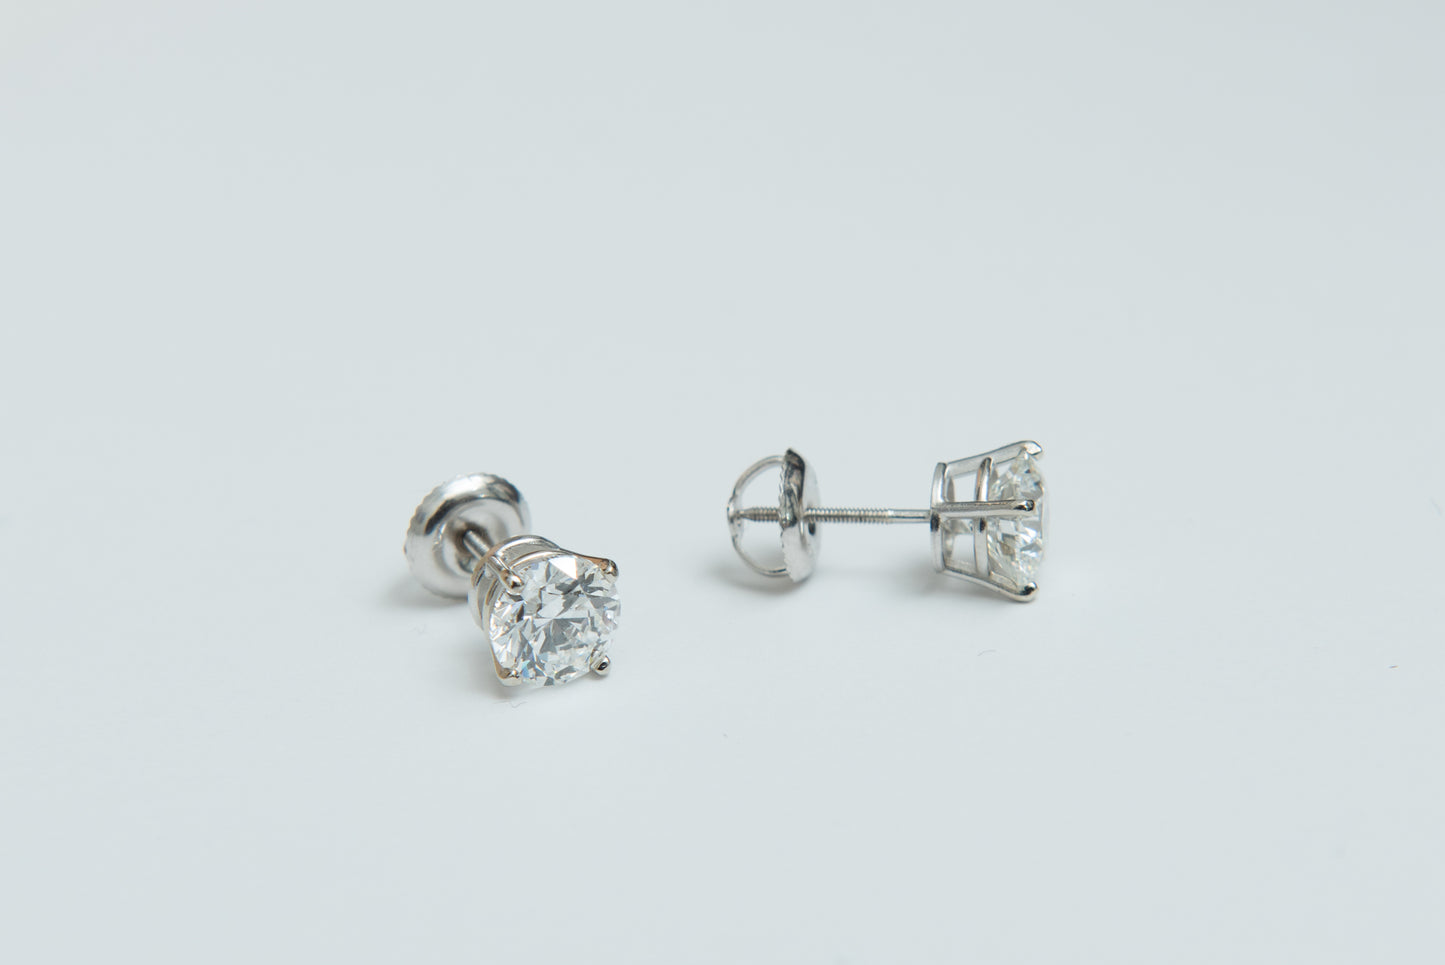 Customizable Lab Grown Diamond Stud Earrings in 14KT Gold